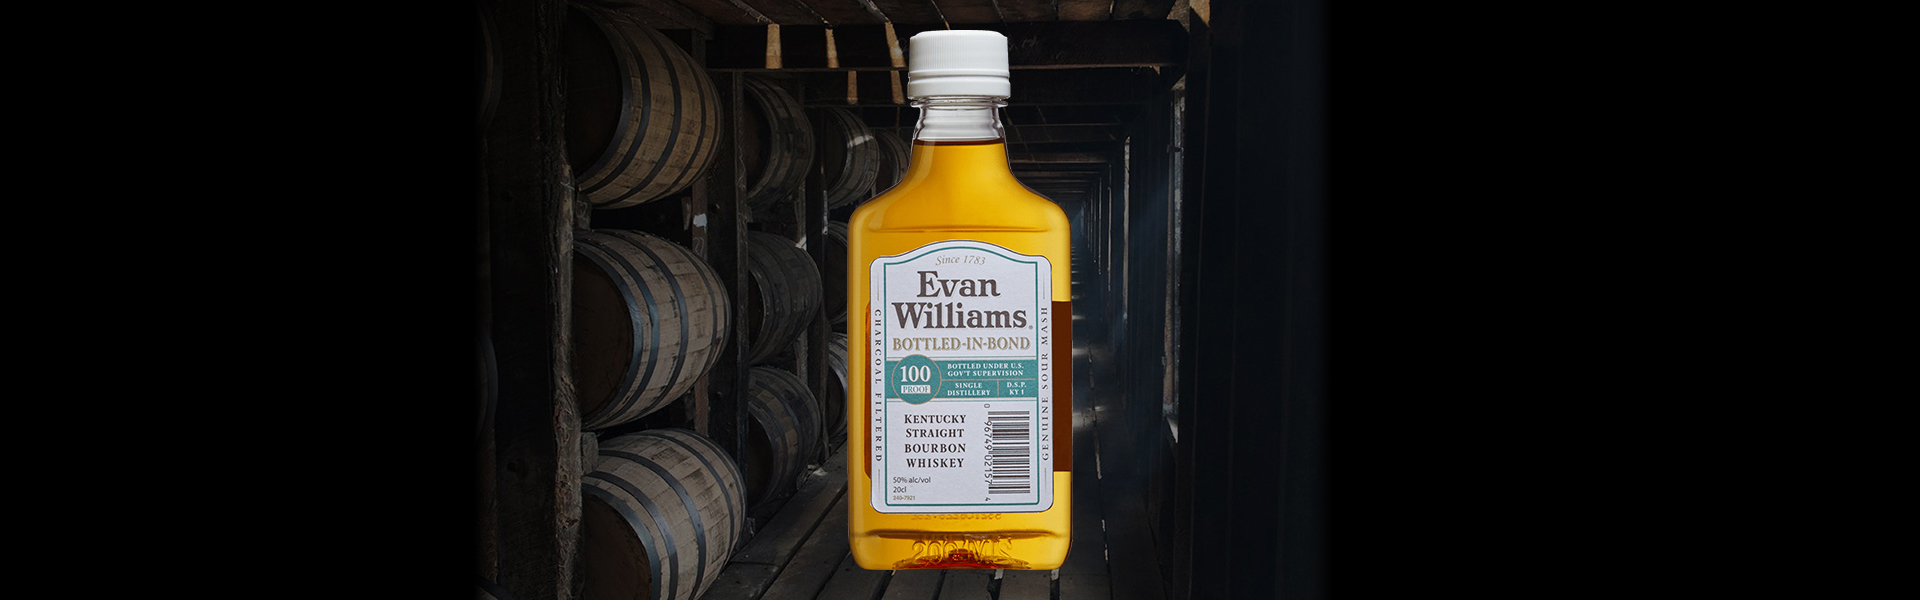 Evan Williams Bottled In Bond Kentucky Straight Bourbon i nytt smidigt format.